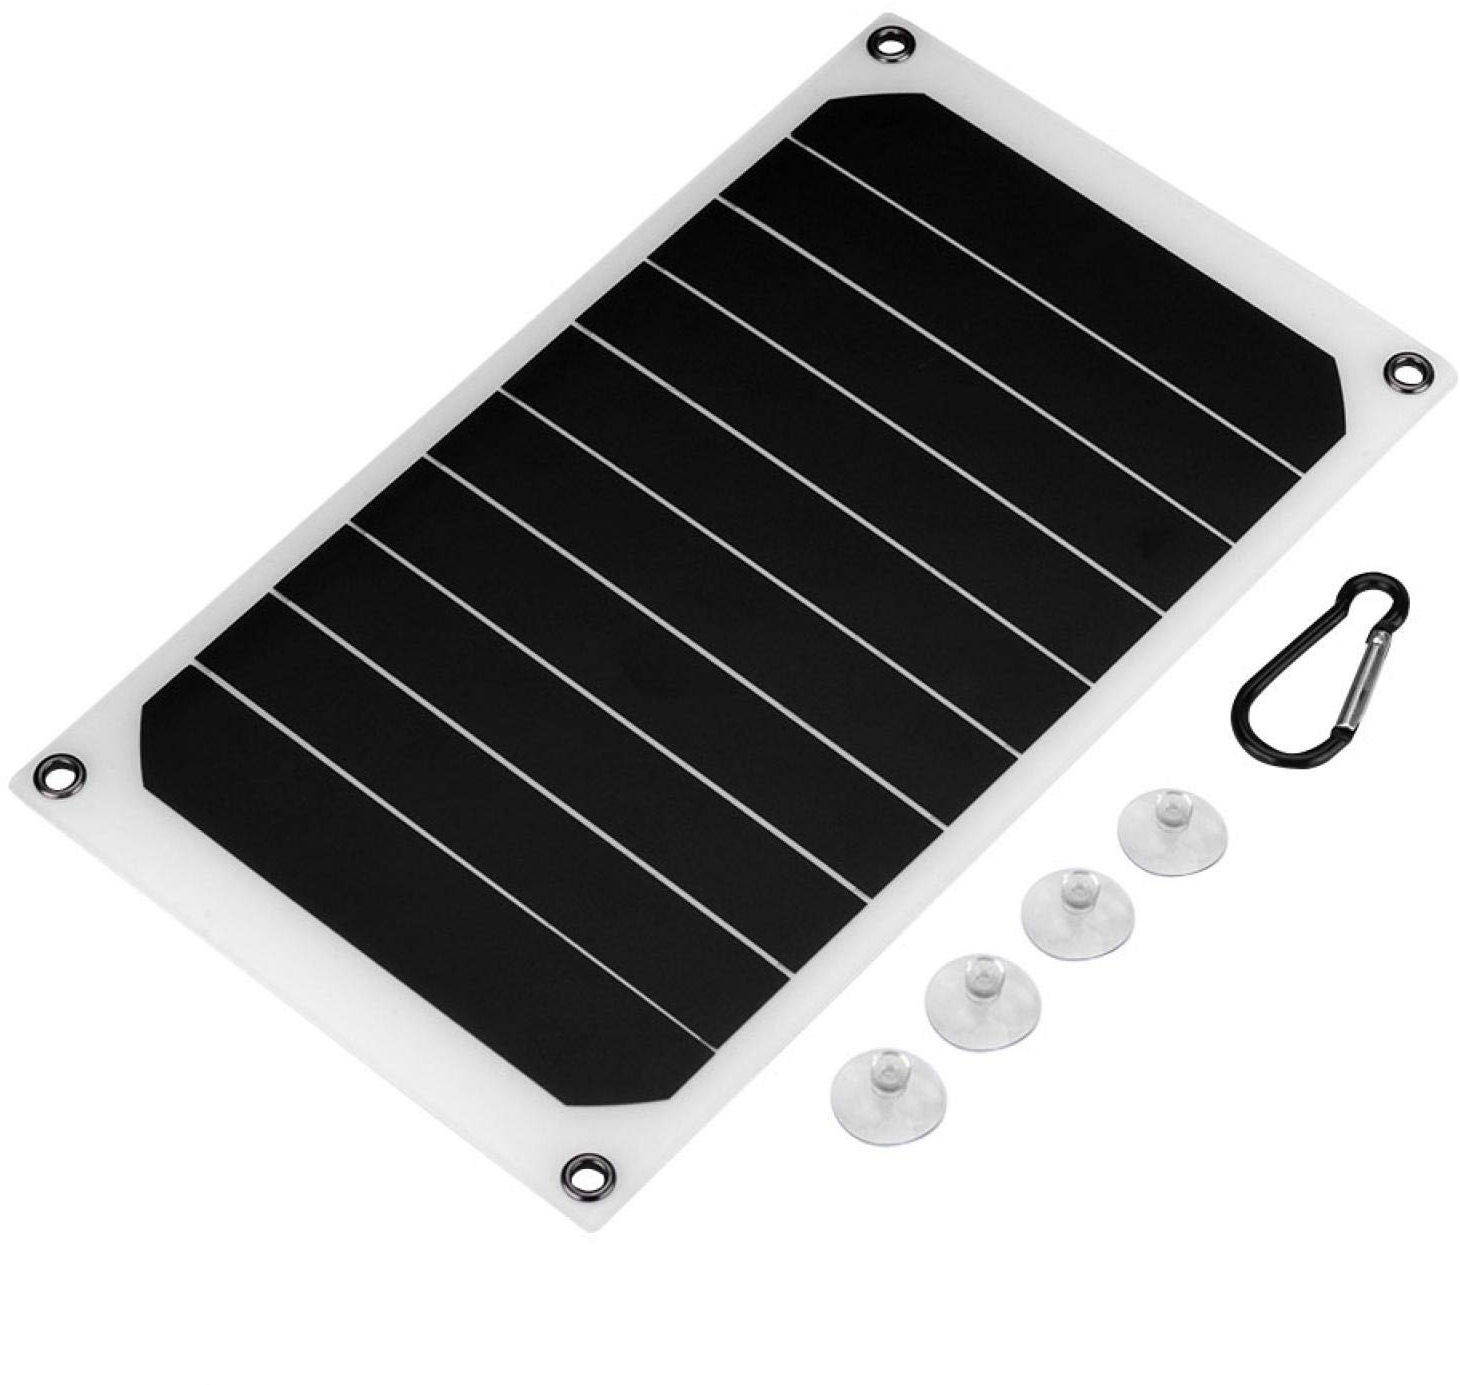 Solar Power Panel Ladegerät, Tragbares 10W Outdoor IP64 Wasserdichtes Solar Panel Mobile Power Charger 5V USB Ausgang